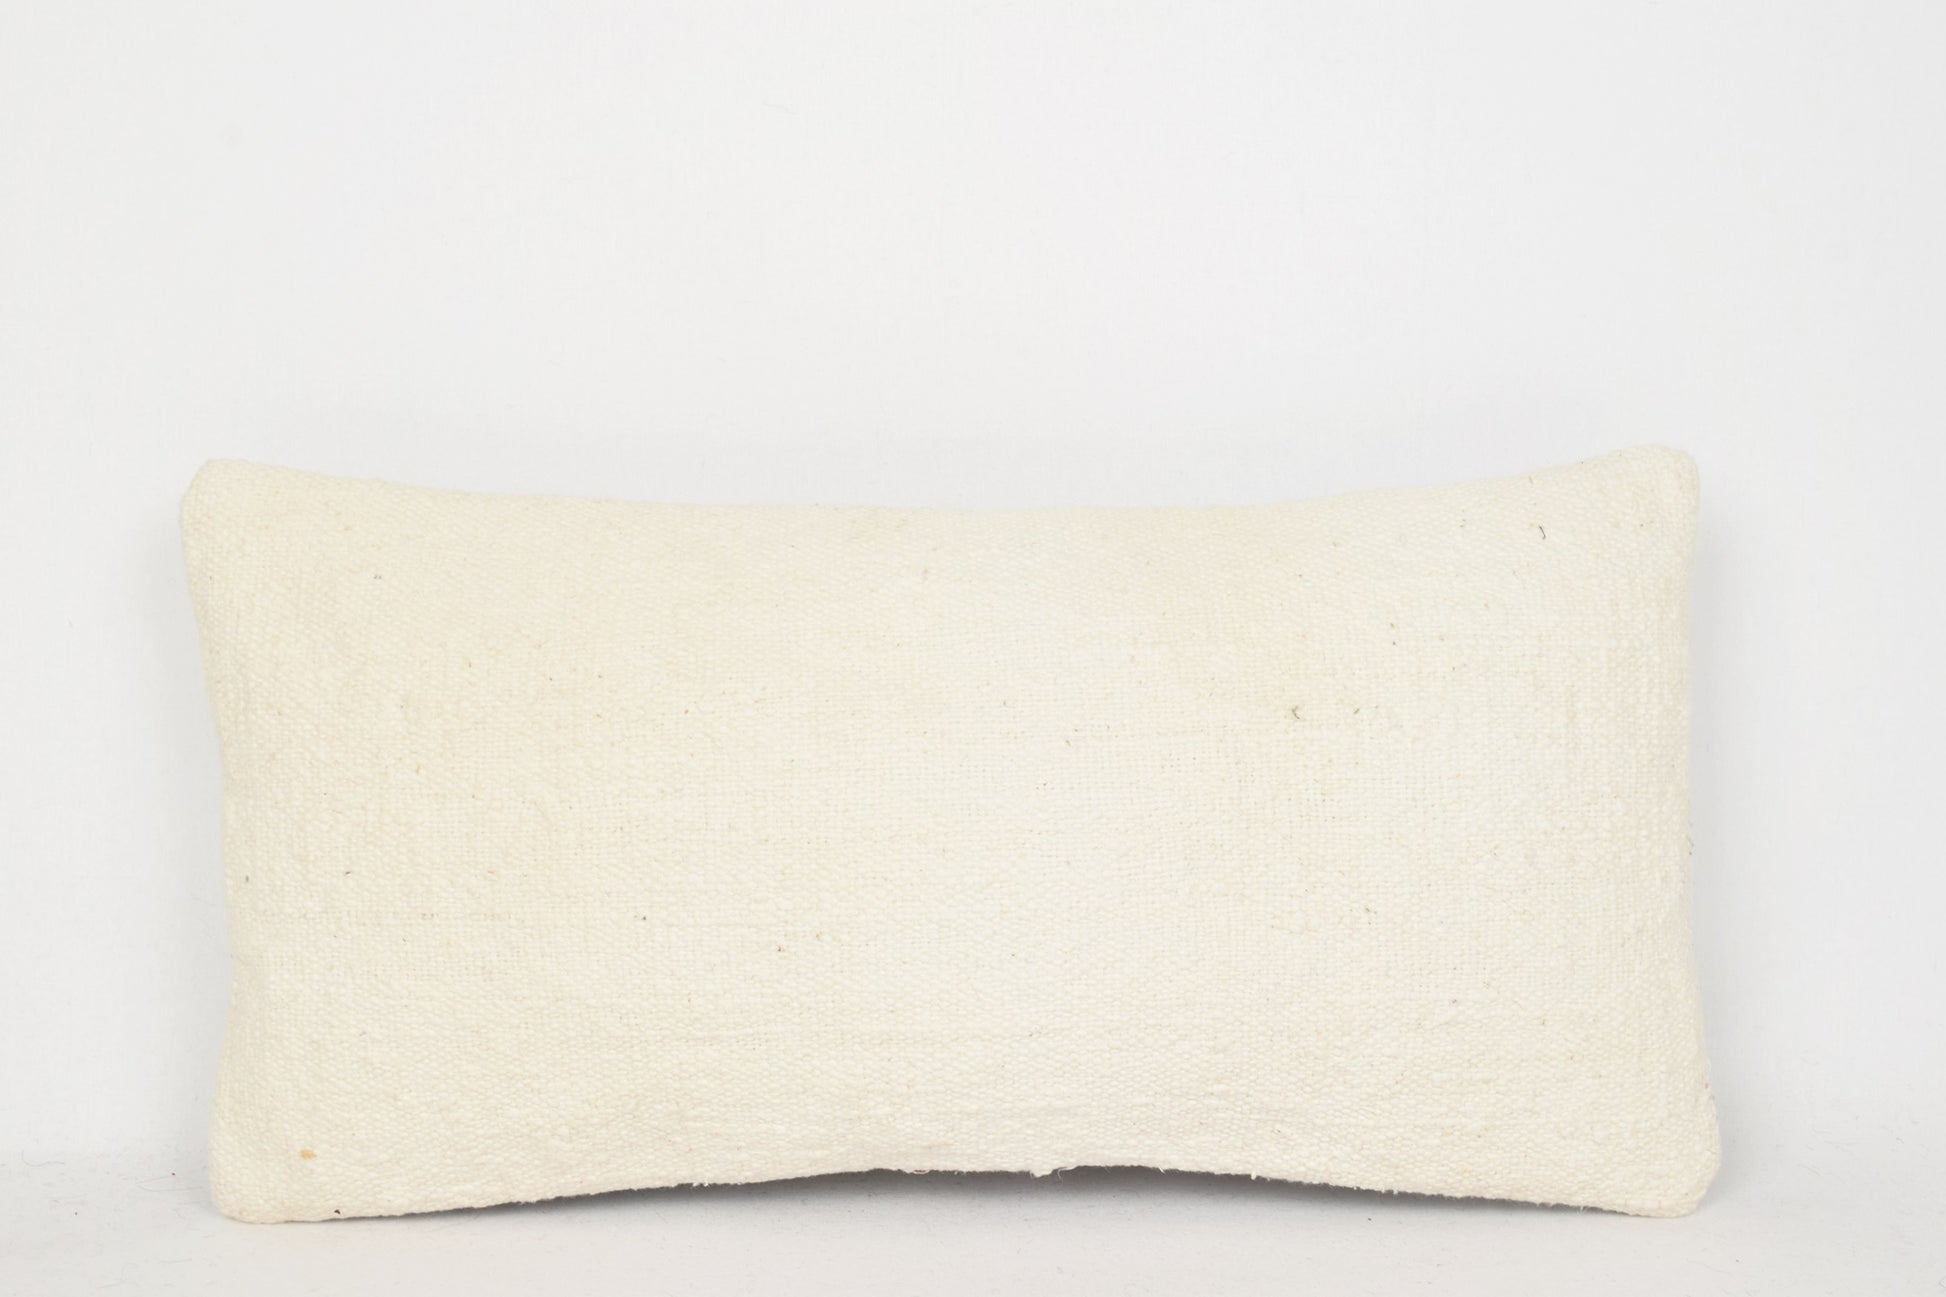 Turkish Rugs Houston TX Pillow G00309 Textile Victorian Decorative Salon Economic